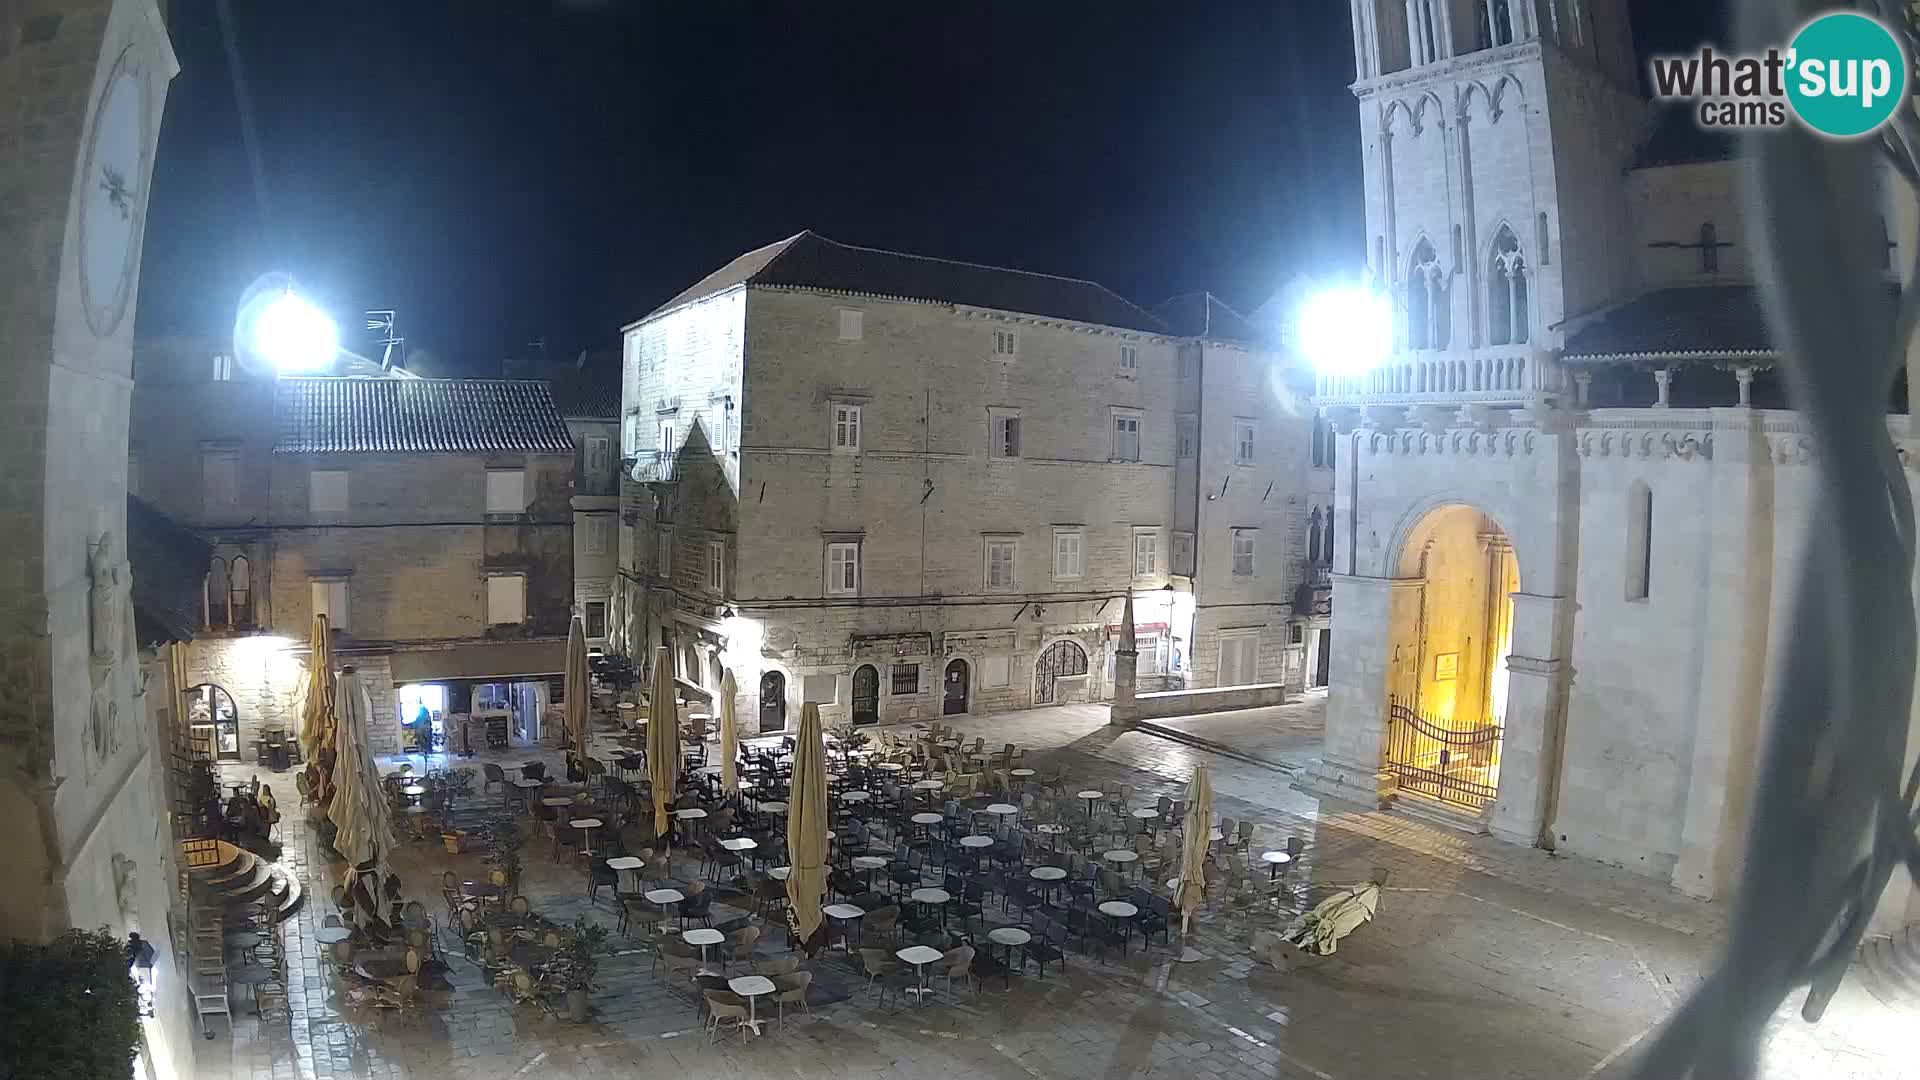 Cámara web en vivo Trogir – Catedral de San Lorenzo – Livecam Croacia